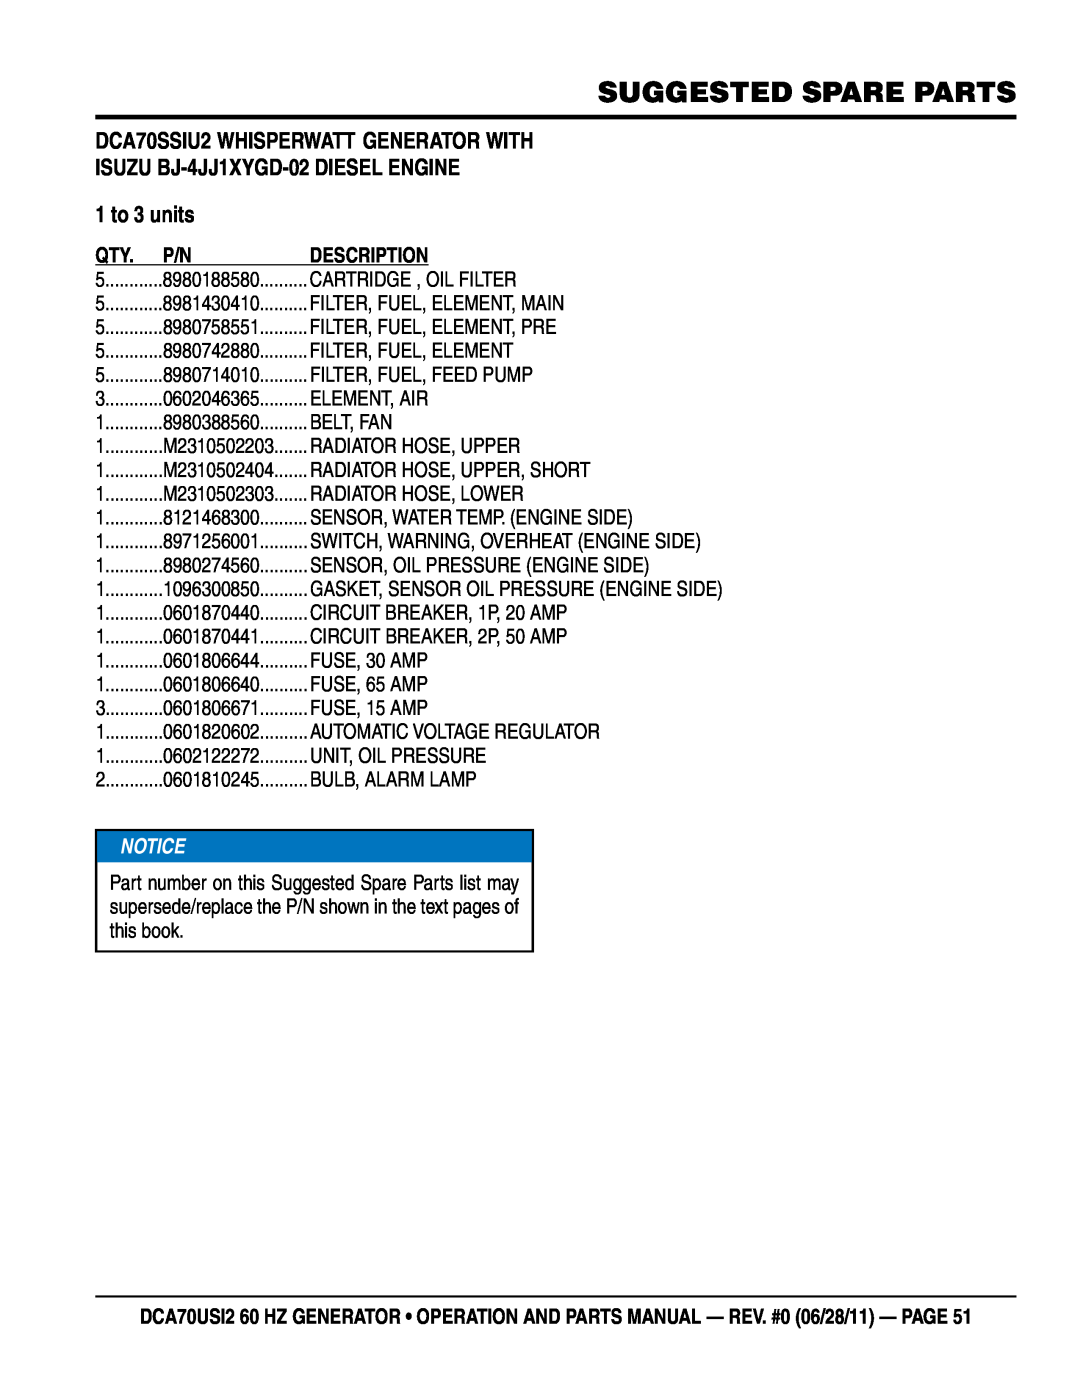 Multiquip DCA70USI2 manual Suggested Spare Parts, 1 to 3 units, Description 